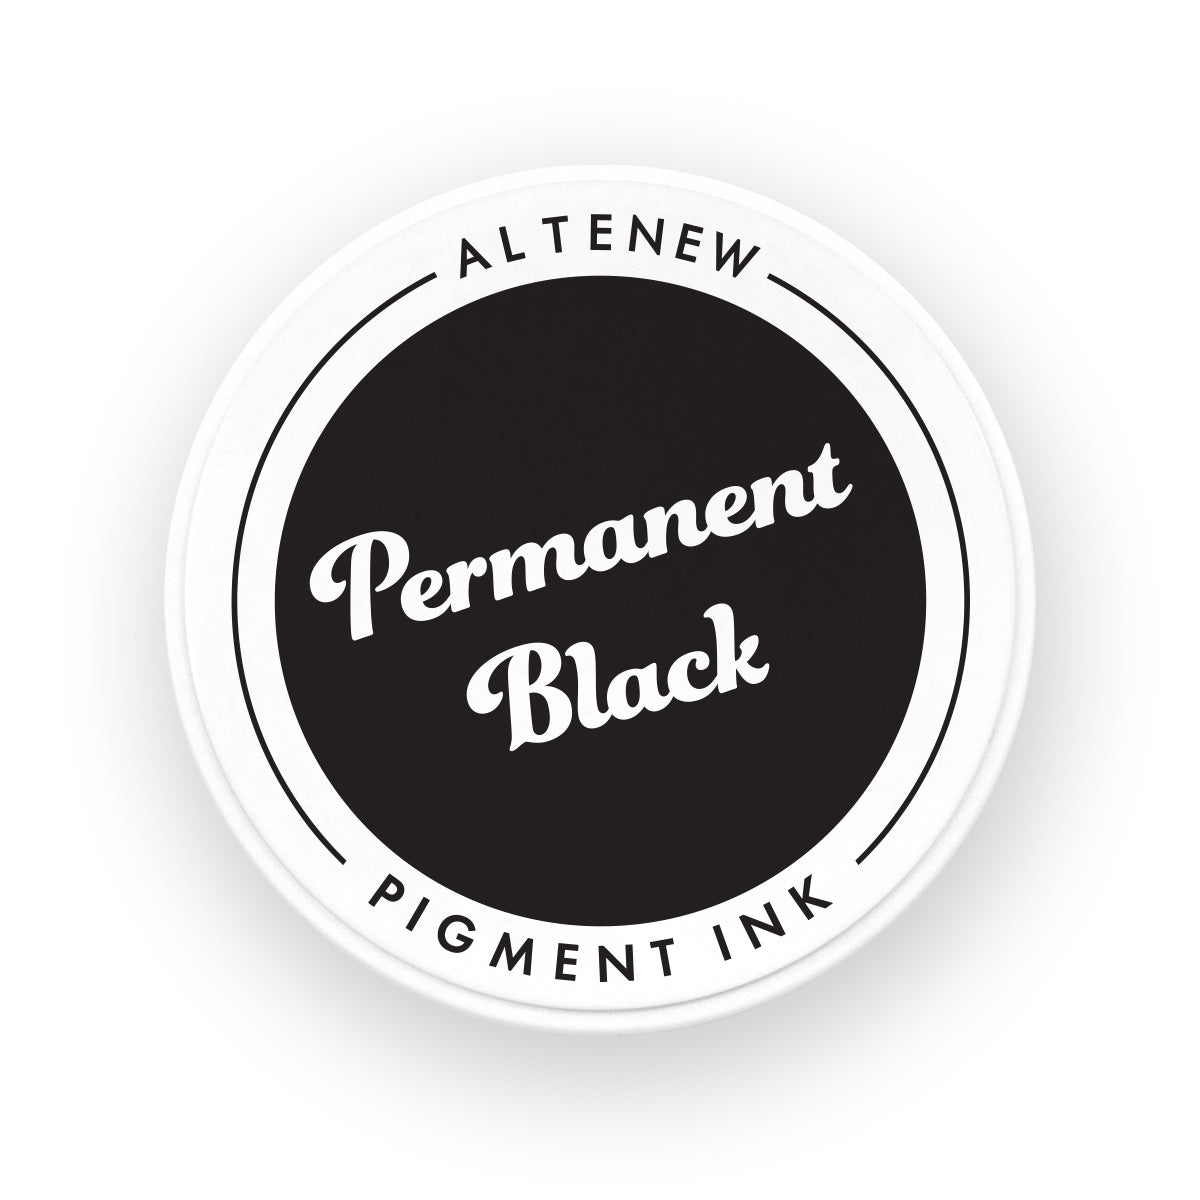 Altenew - Permanent Black Pigment Ink 